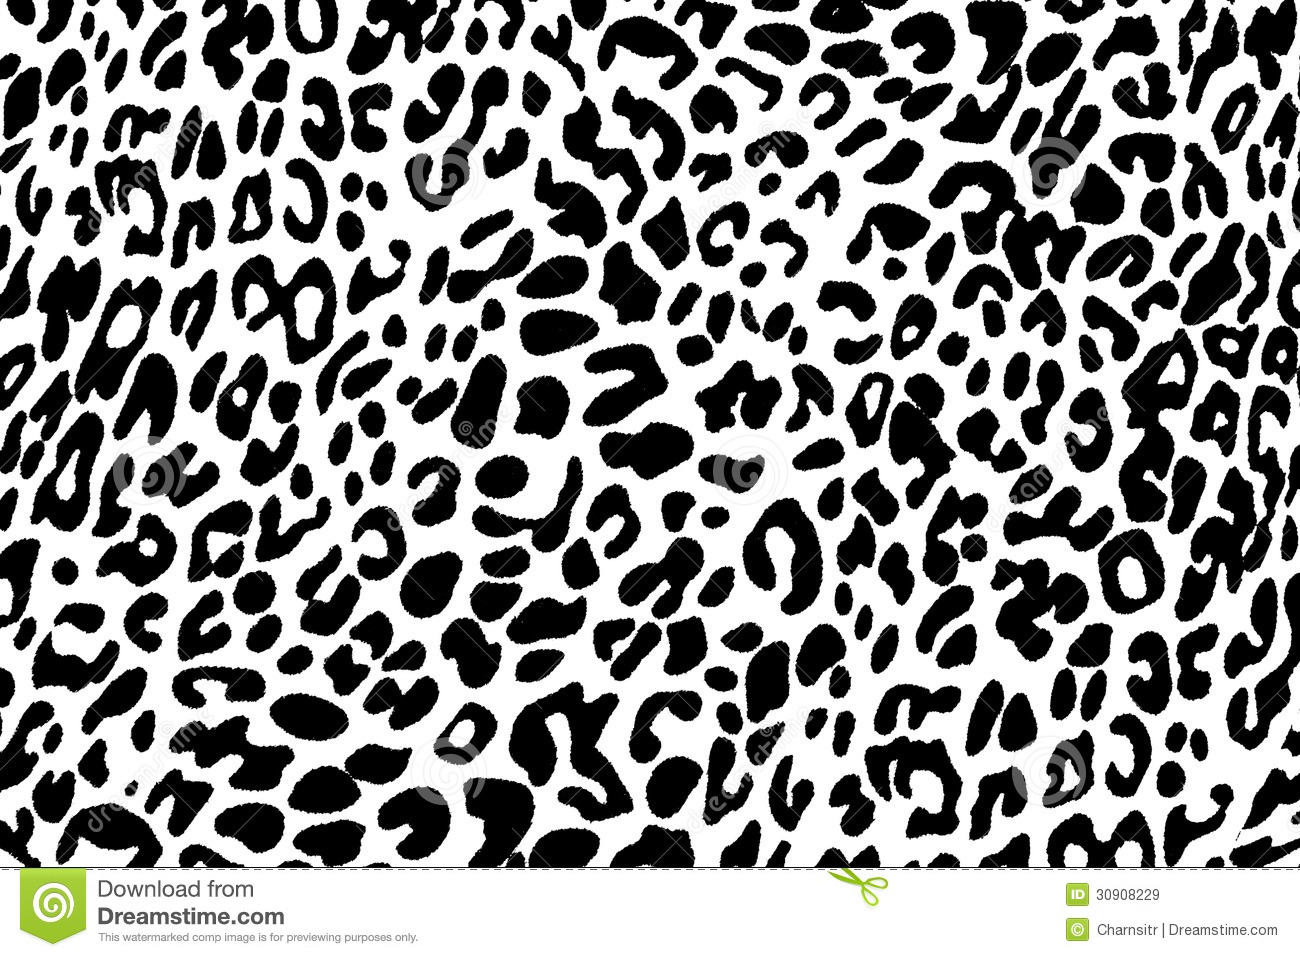 74+] Black And White Animal Wallpaper - WallpaperSafari